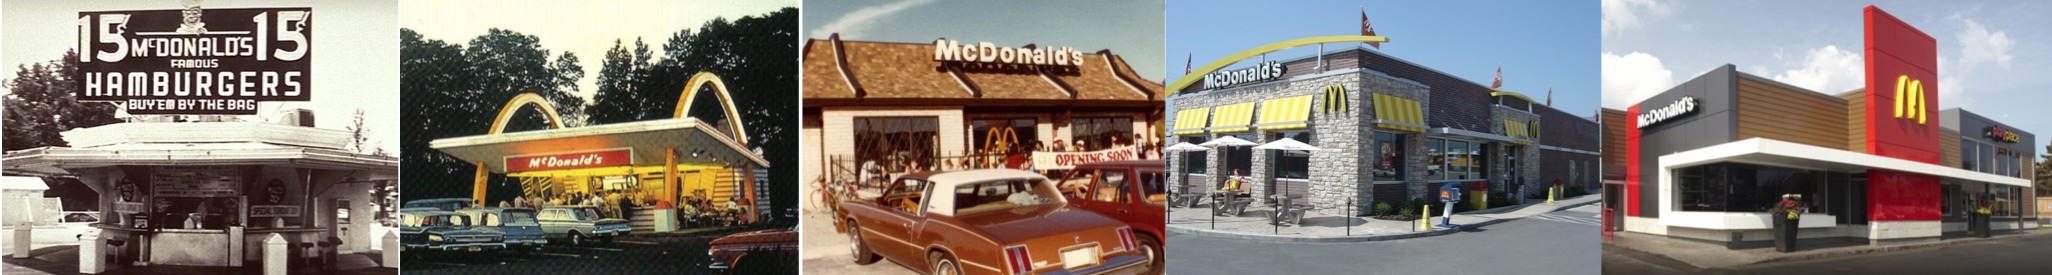 mcdonalds-restaurants-change-over-time